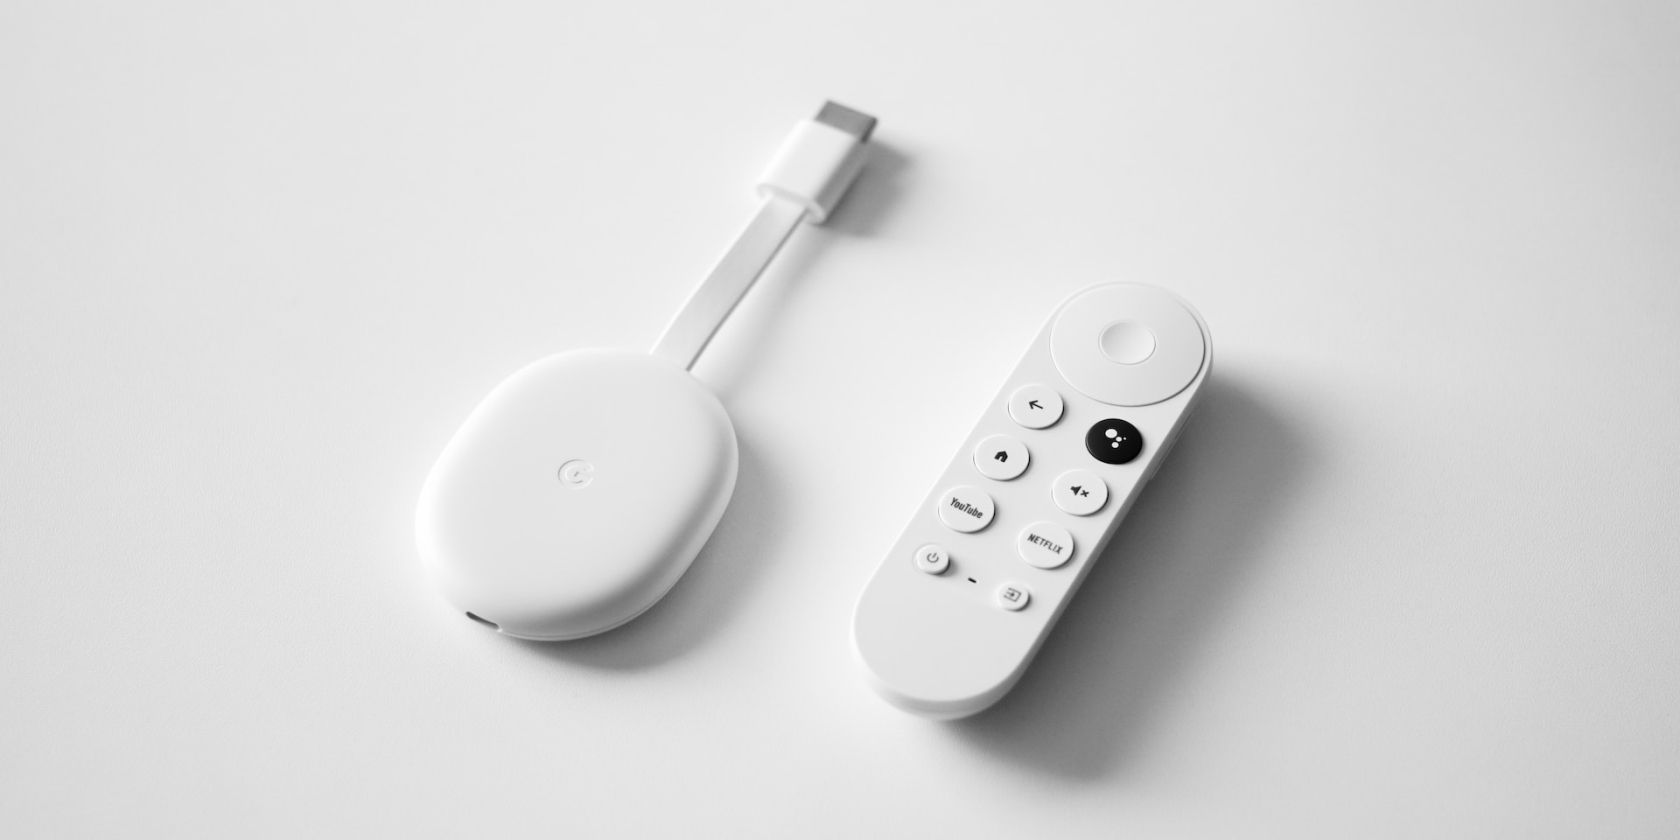 Chromecast with Google TV and a remote